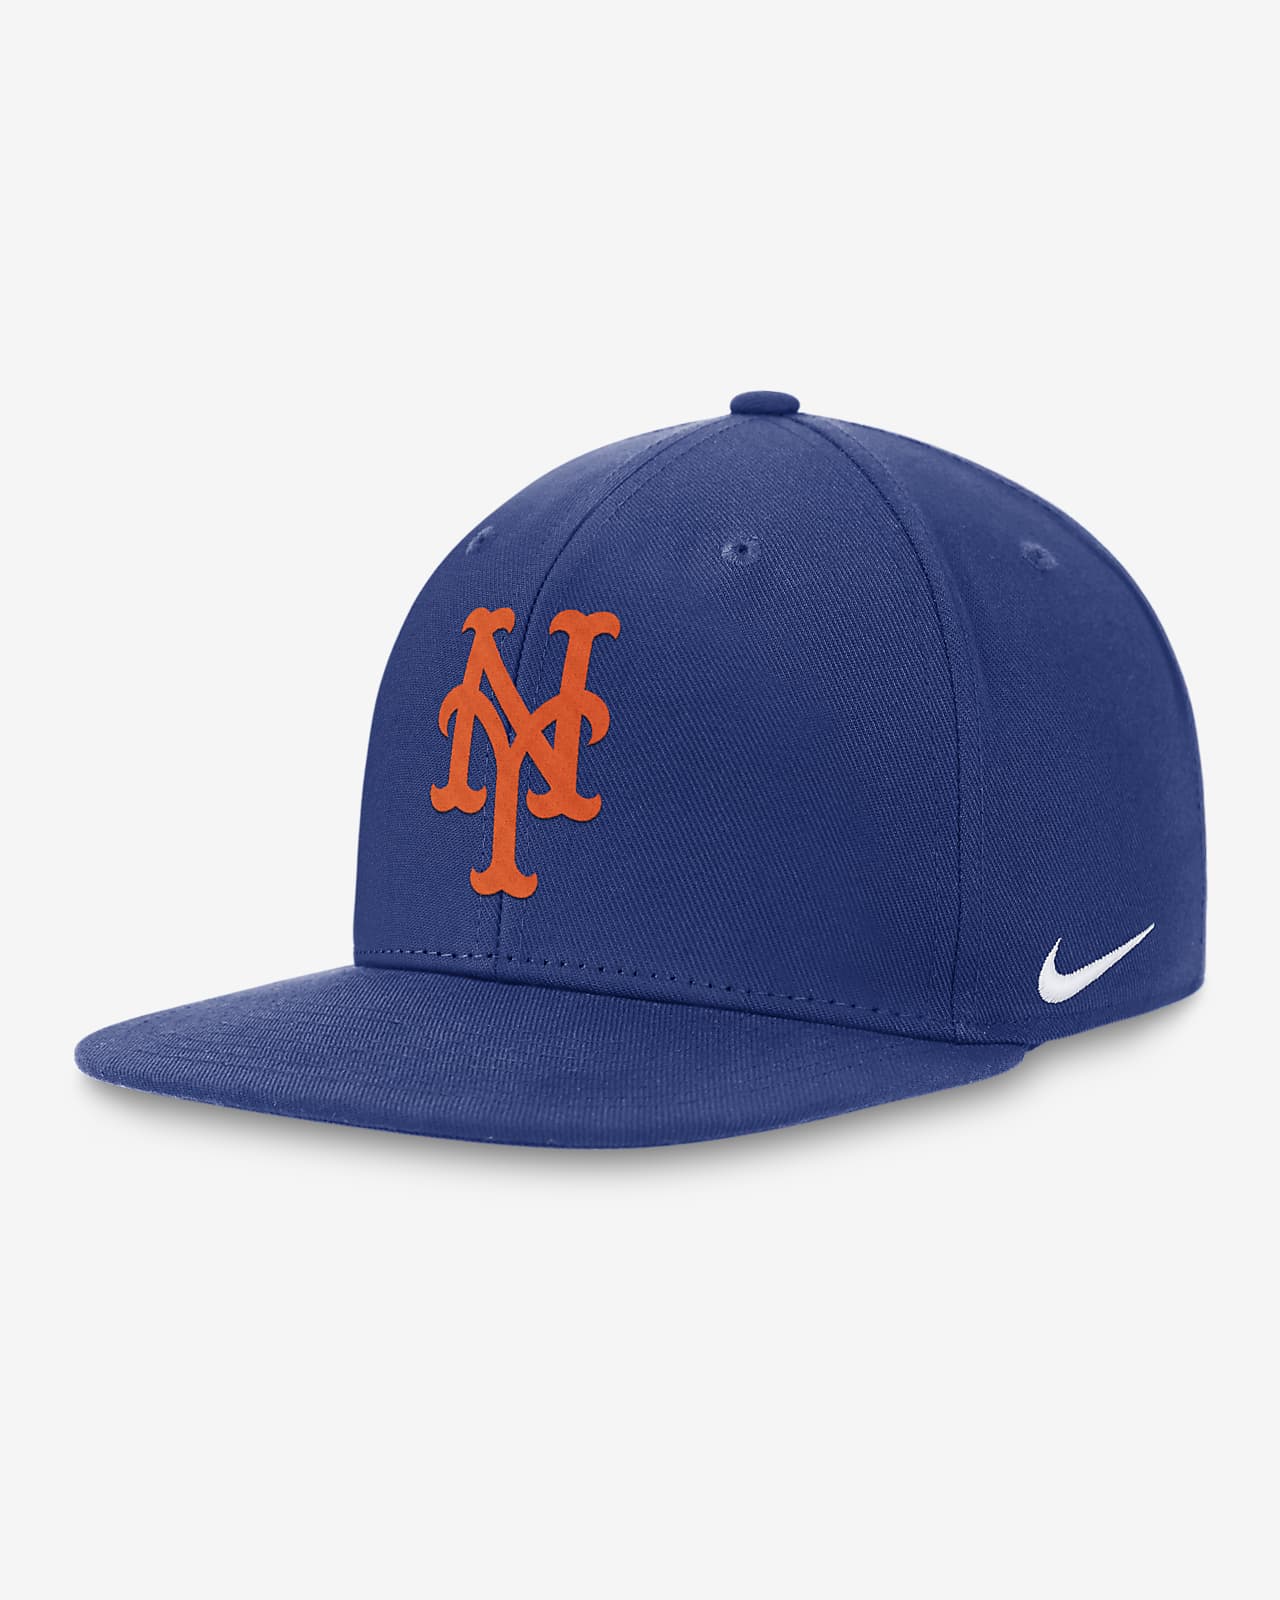 Customized American League New York Mets Home Away Baseball